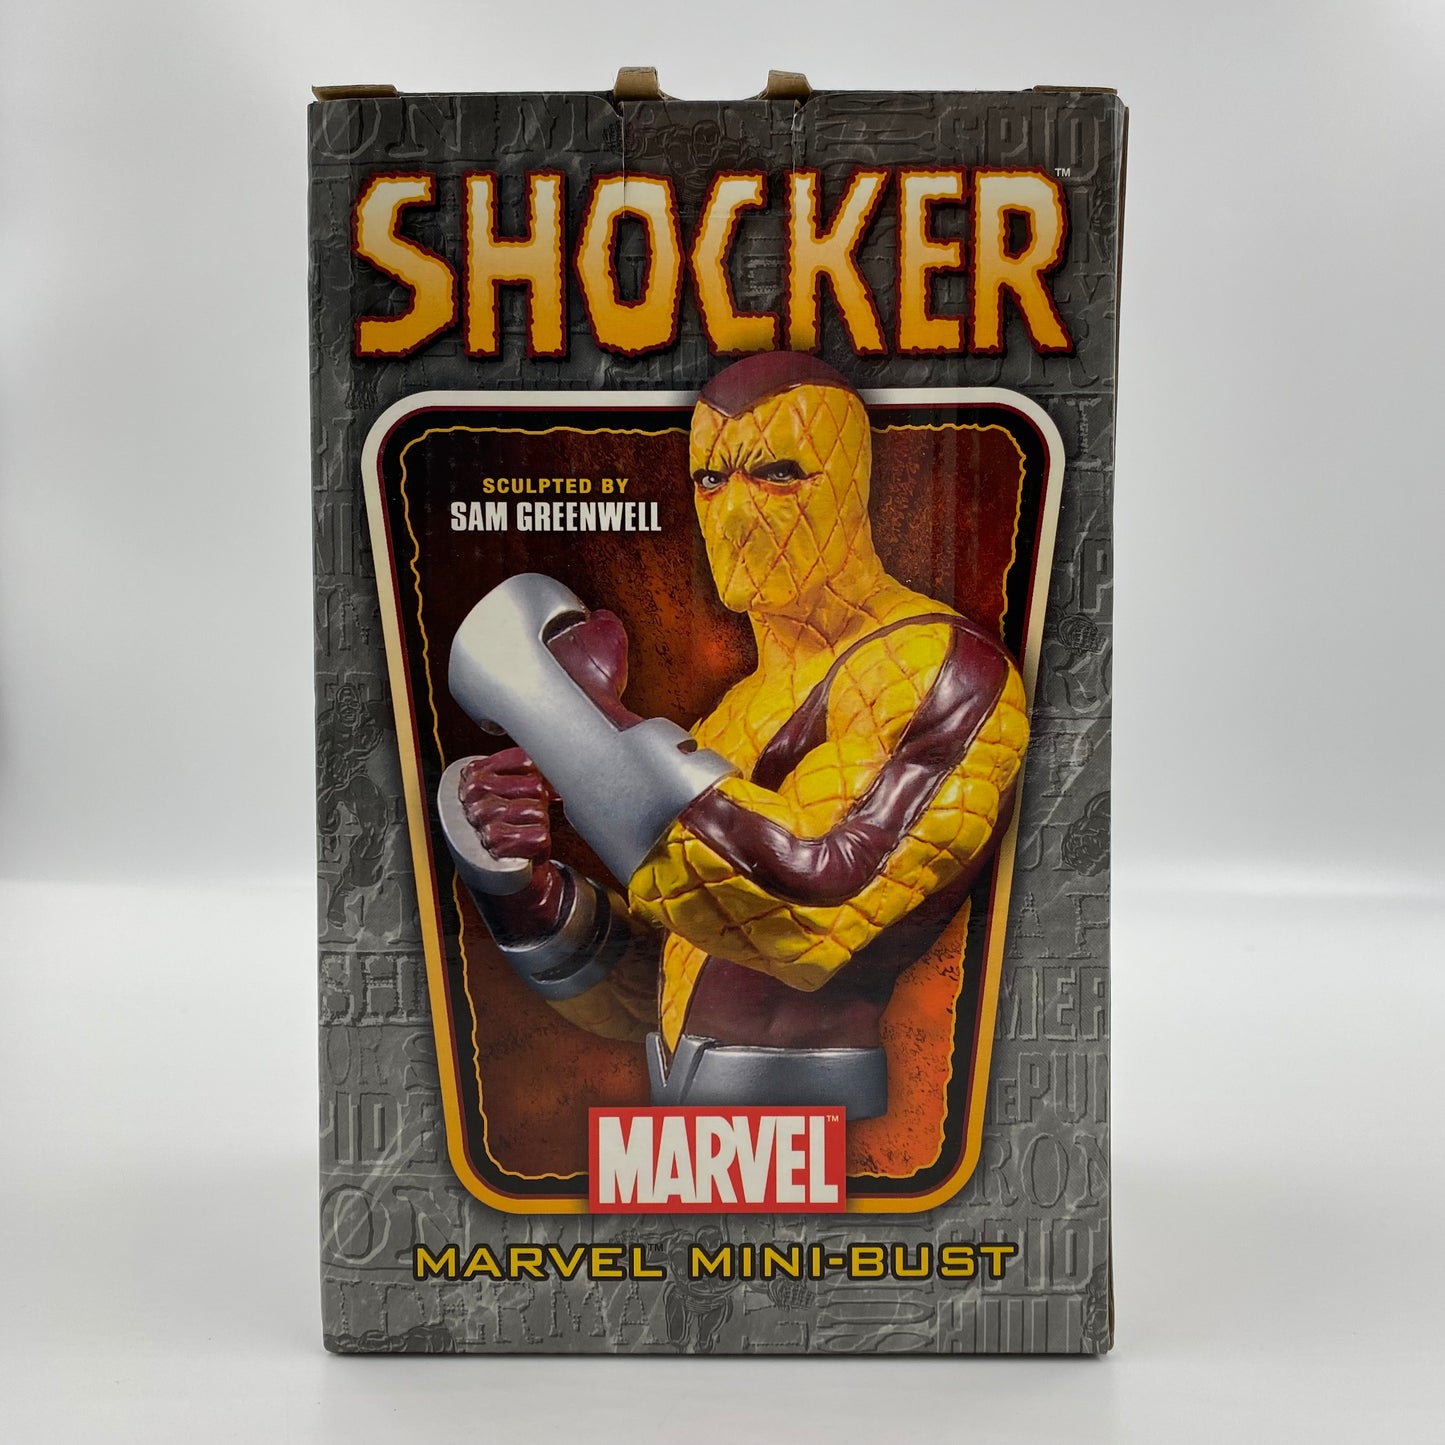 Shocker Marvel mini-bust (2006) Bowen Designs